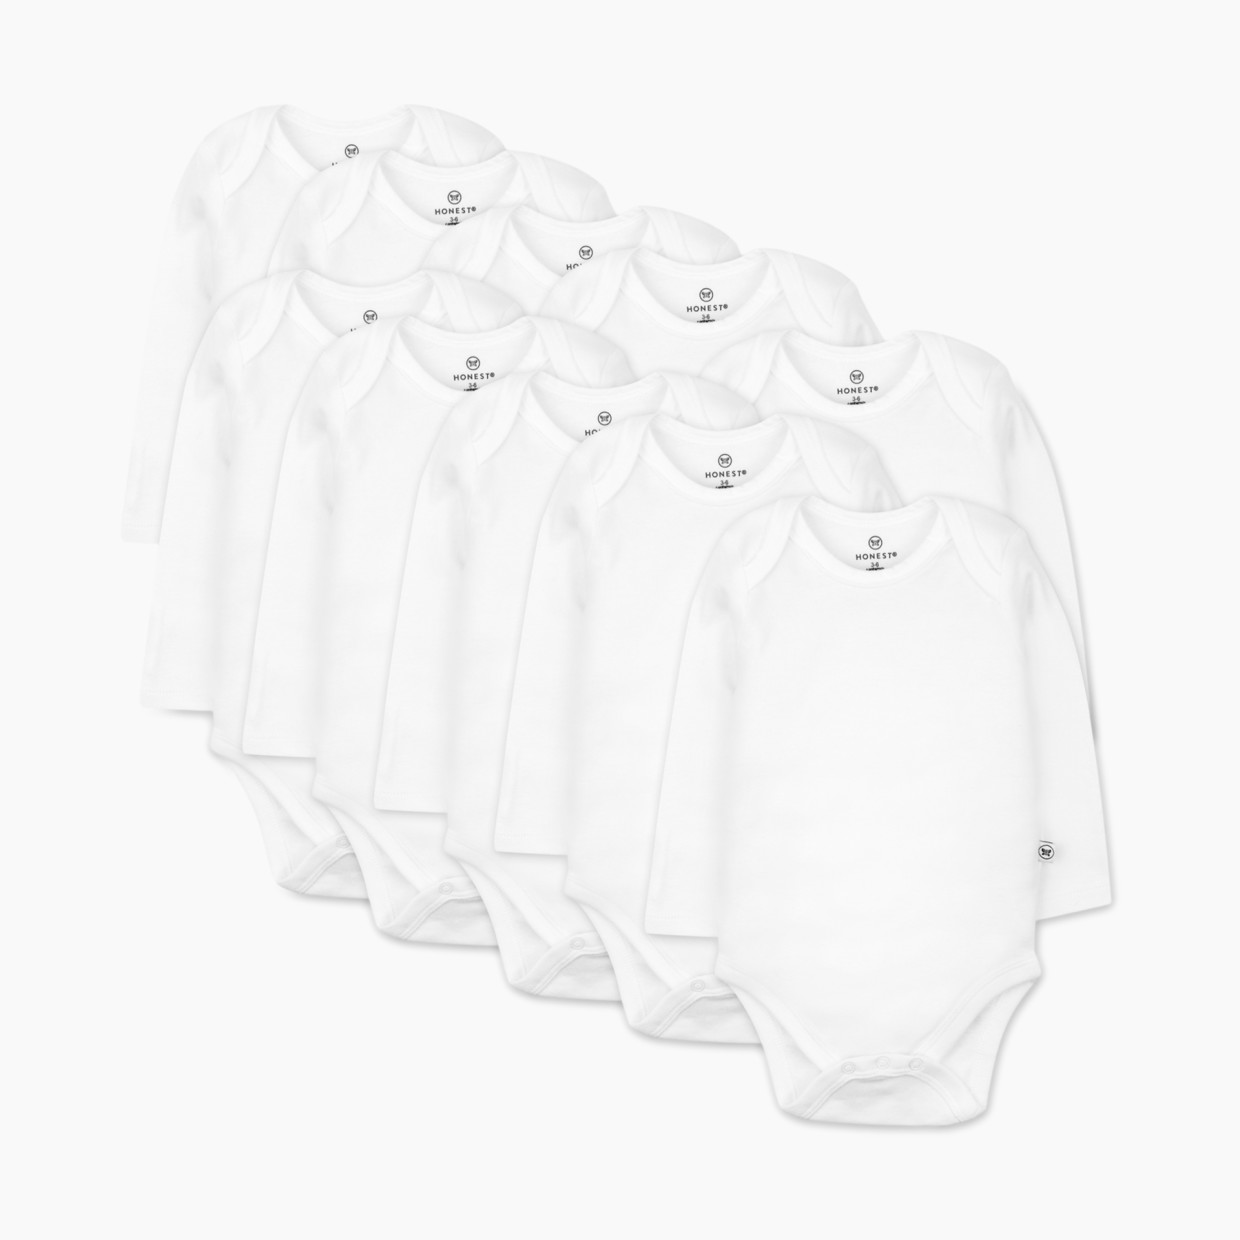 Honest Baby Clothing 10-Pack Organic Cotton Long Sleeve Bodysuits - Bright White, 3-6 M, 10.